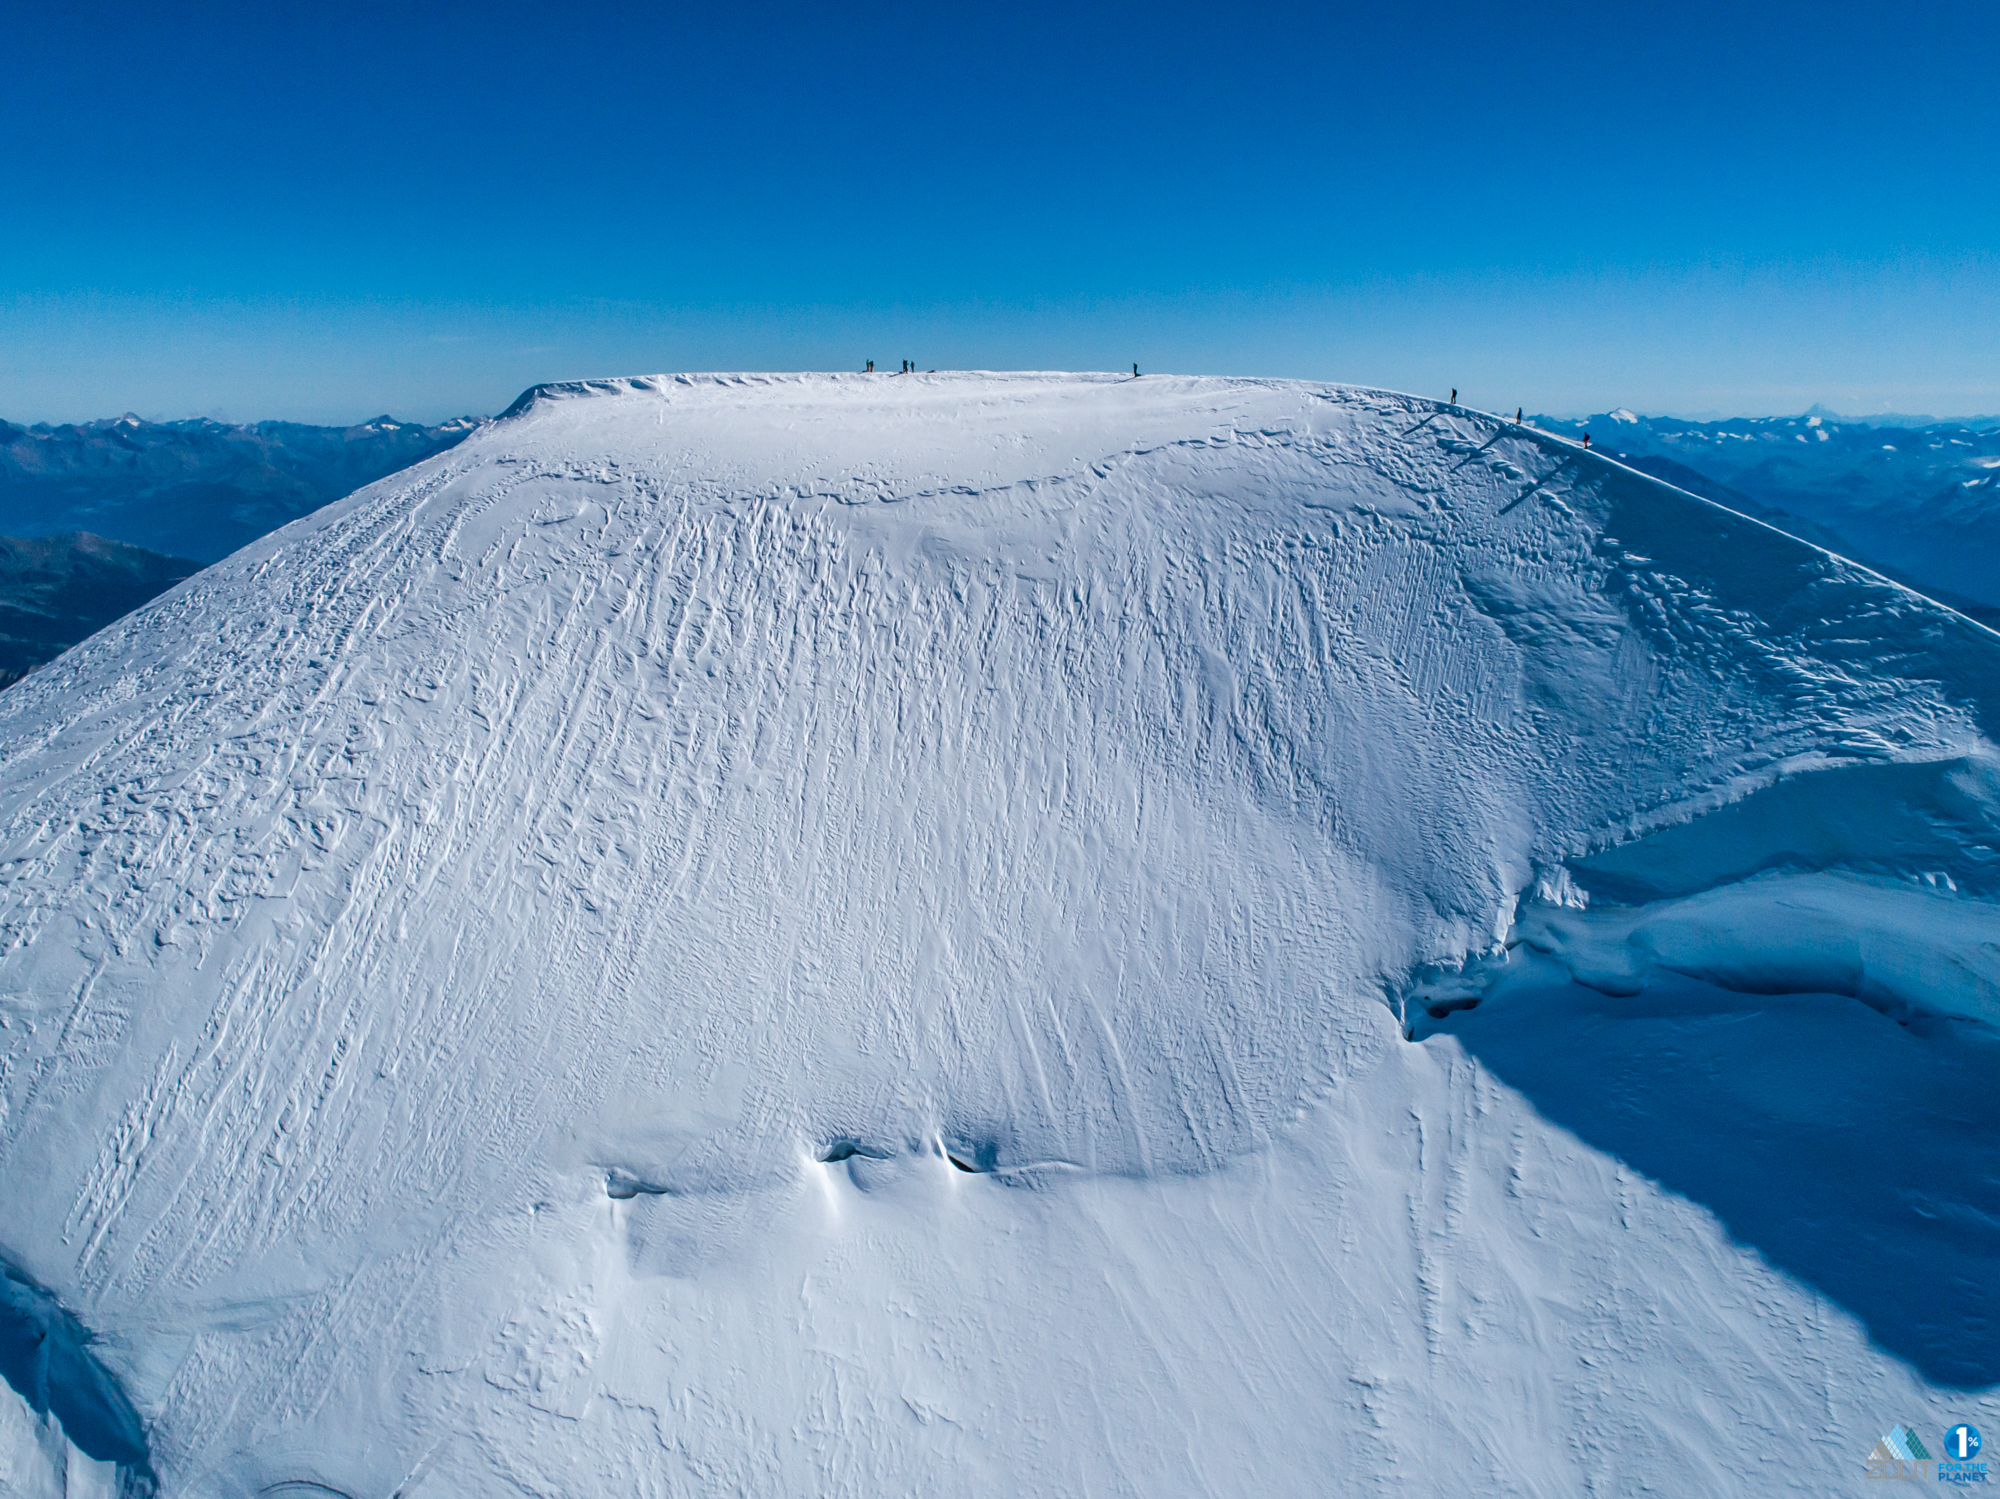 Summit Mt Blanc